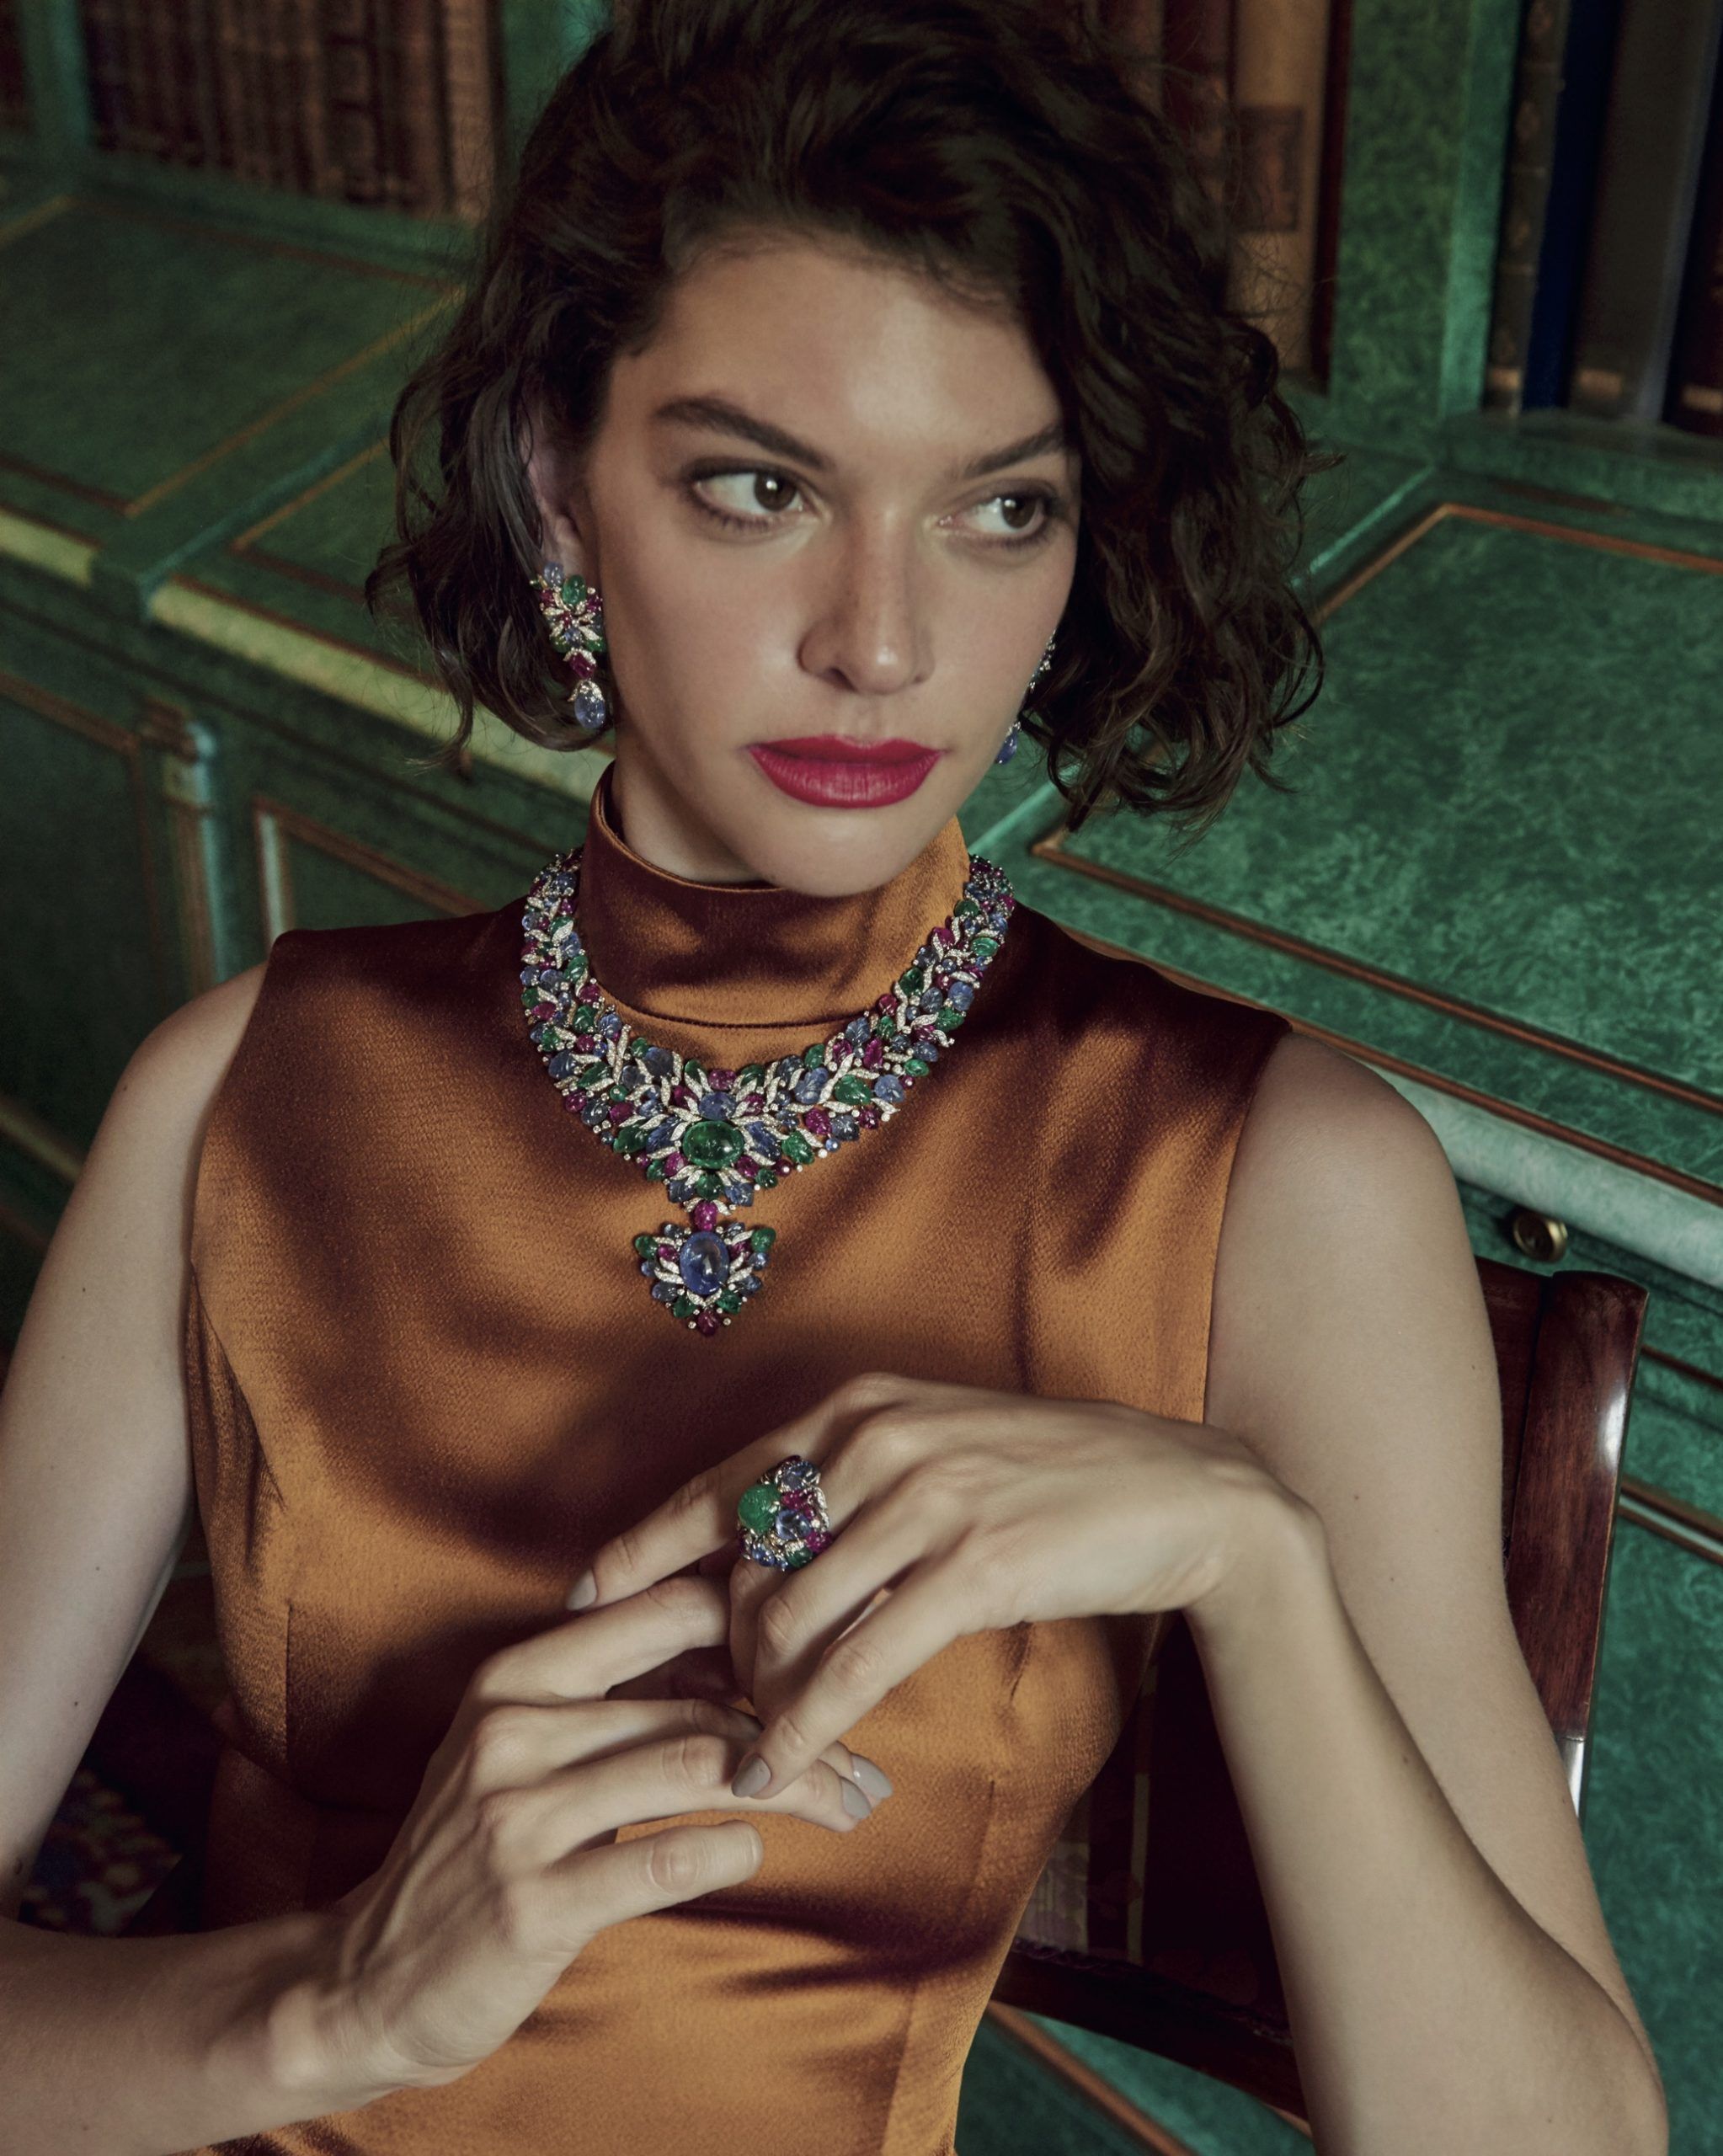 In the eye of the beholder: Cartier's Beautés du Monde high jewellery ...